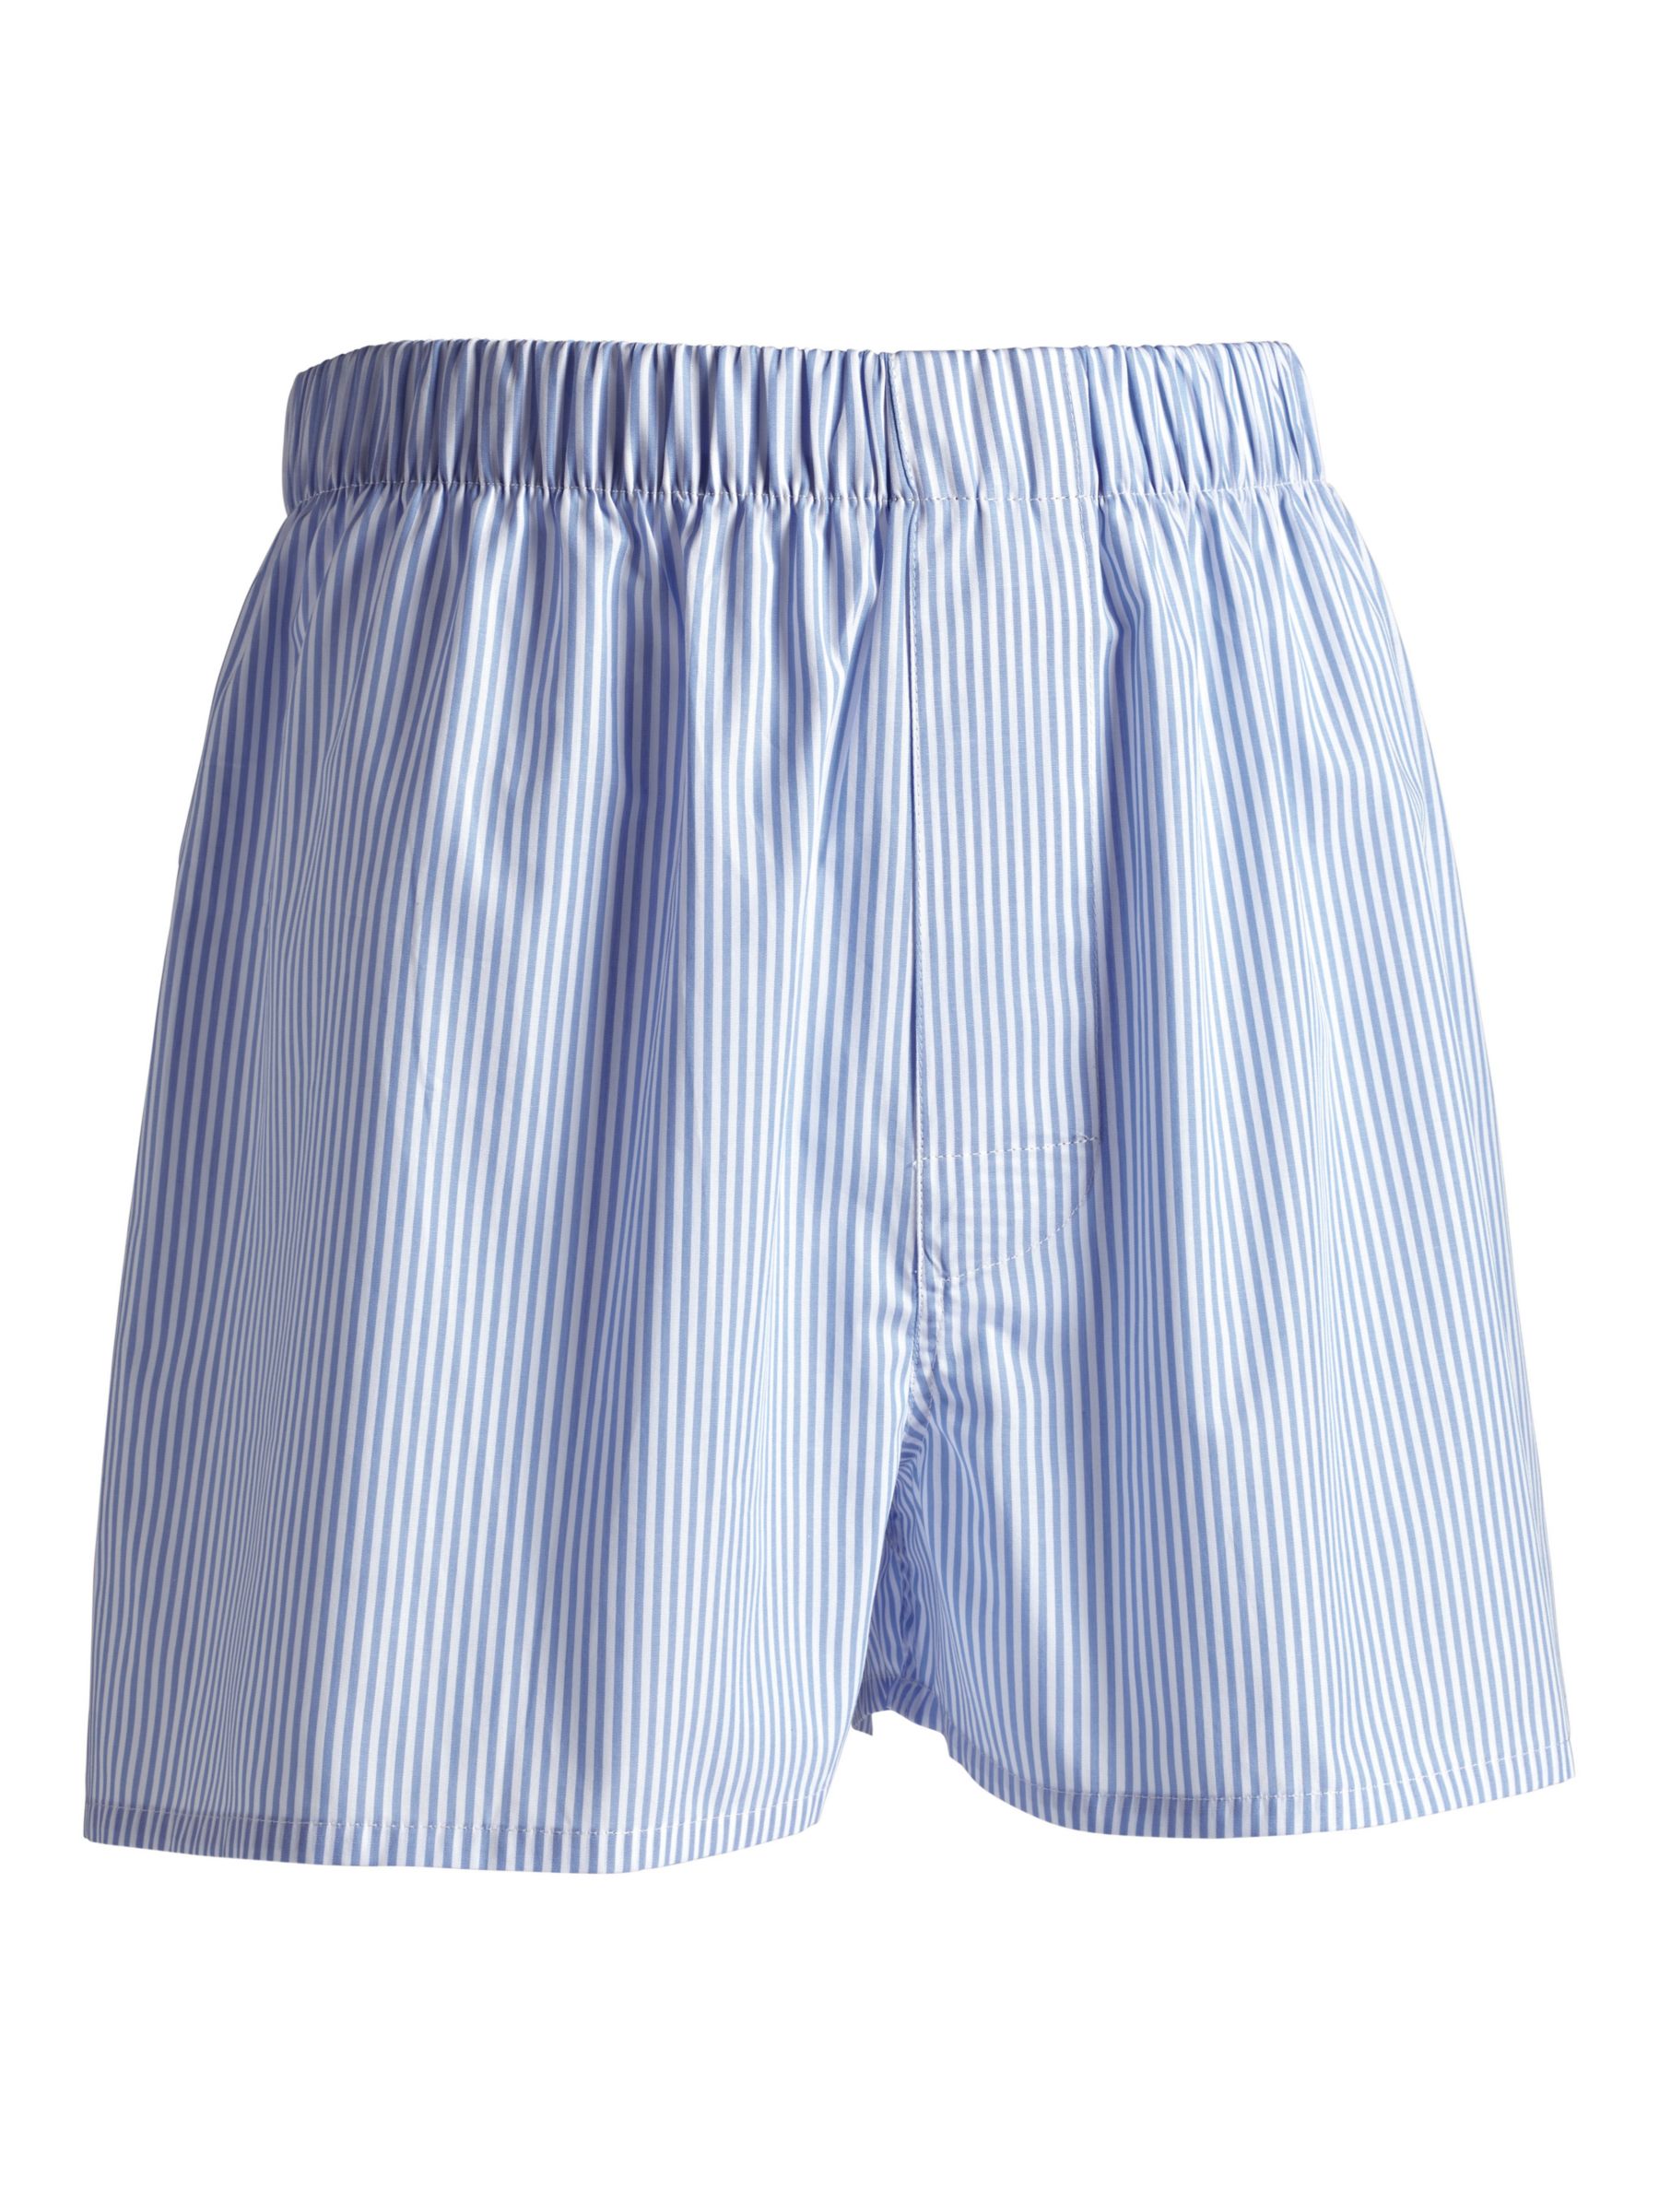 Charles Tyrwhitt Stripe Print Cotton Boxer Shorts, Cornflower Blue, S